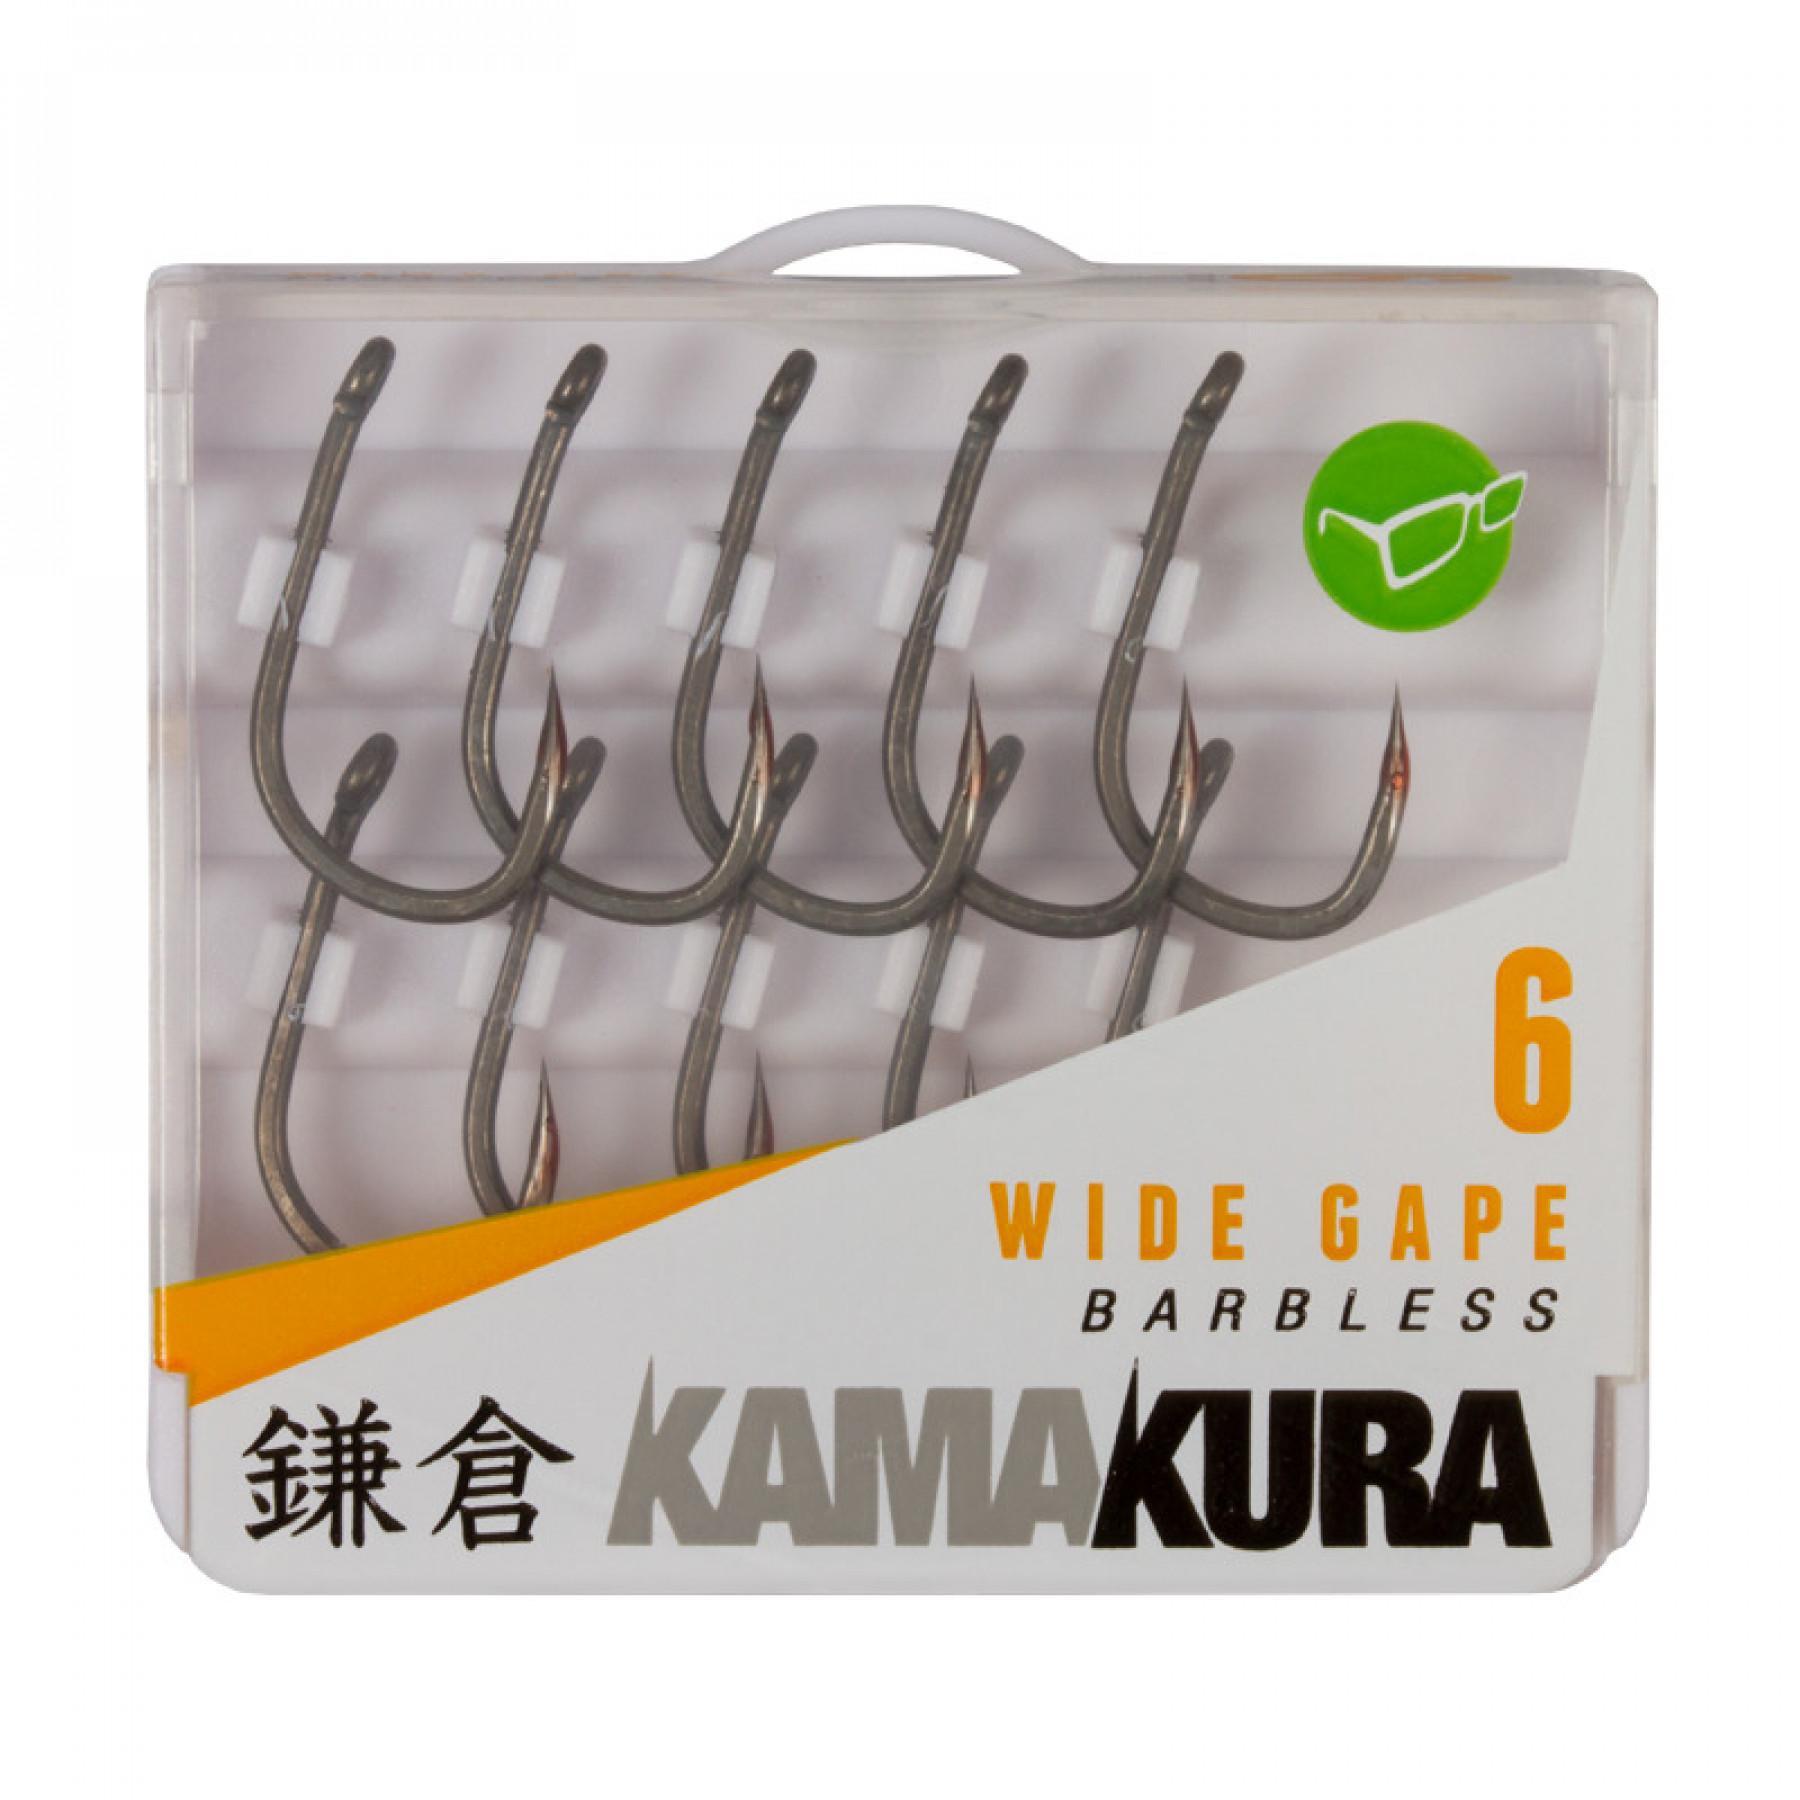 Haken korda Kamakura Wide Gape Barbless S6